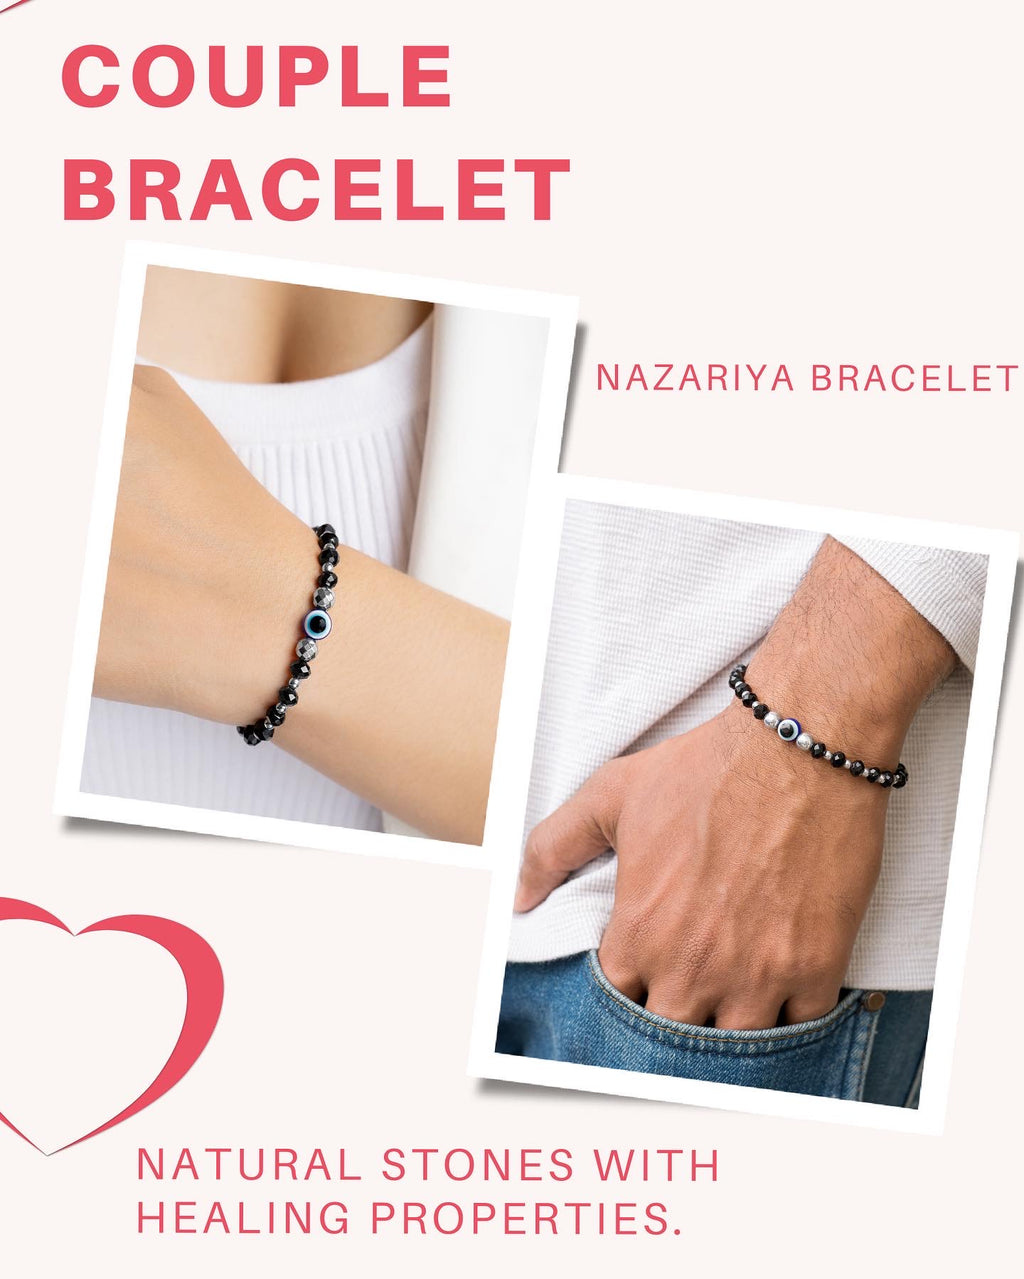 Nazariya couple bracelet